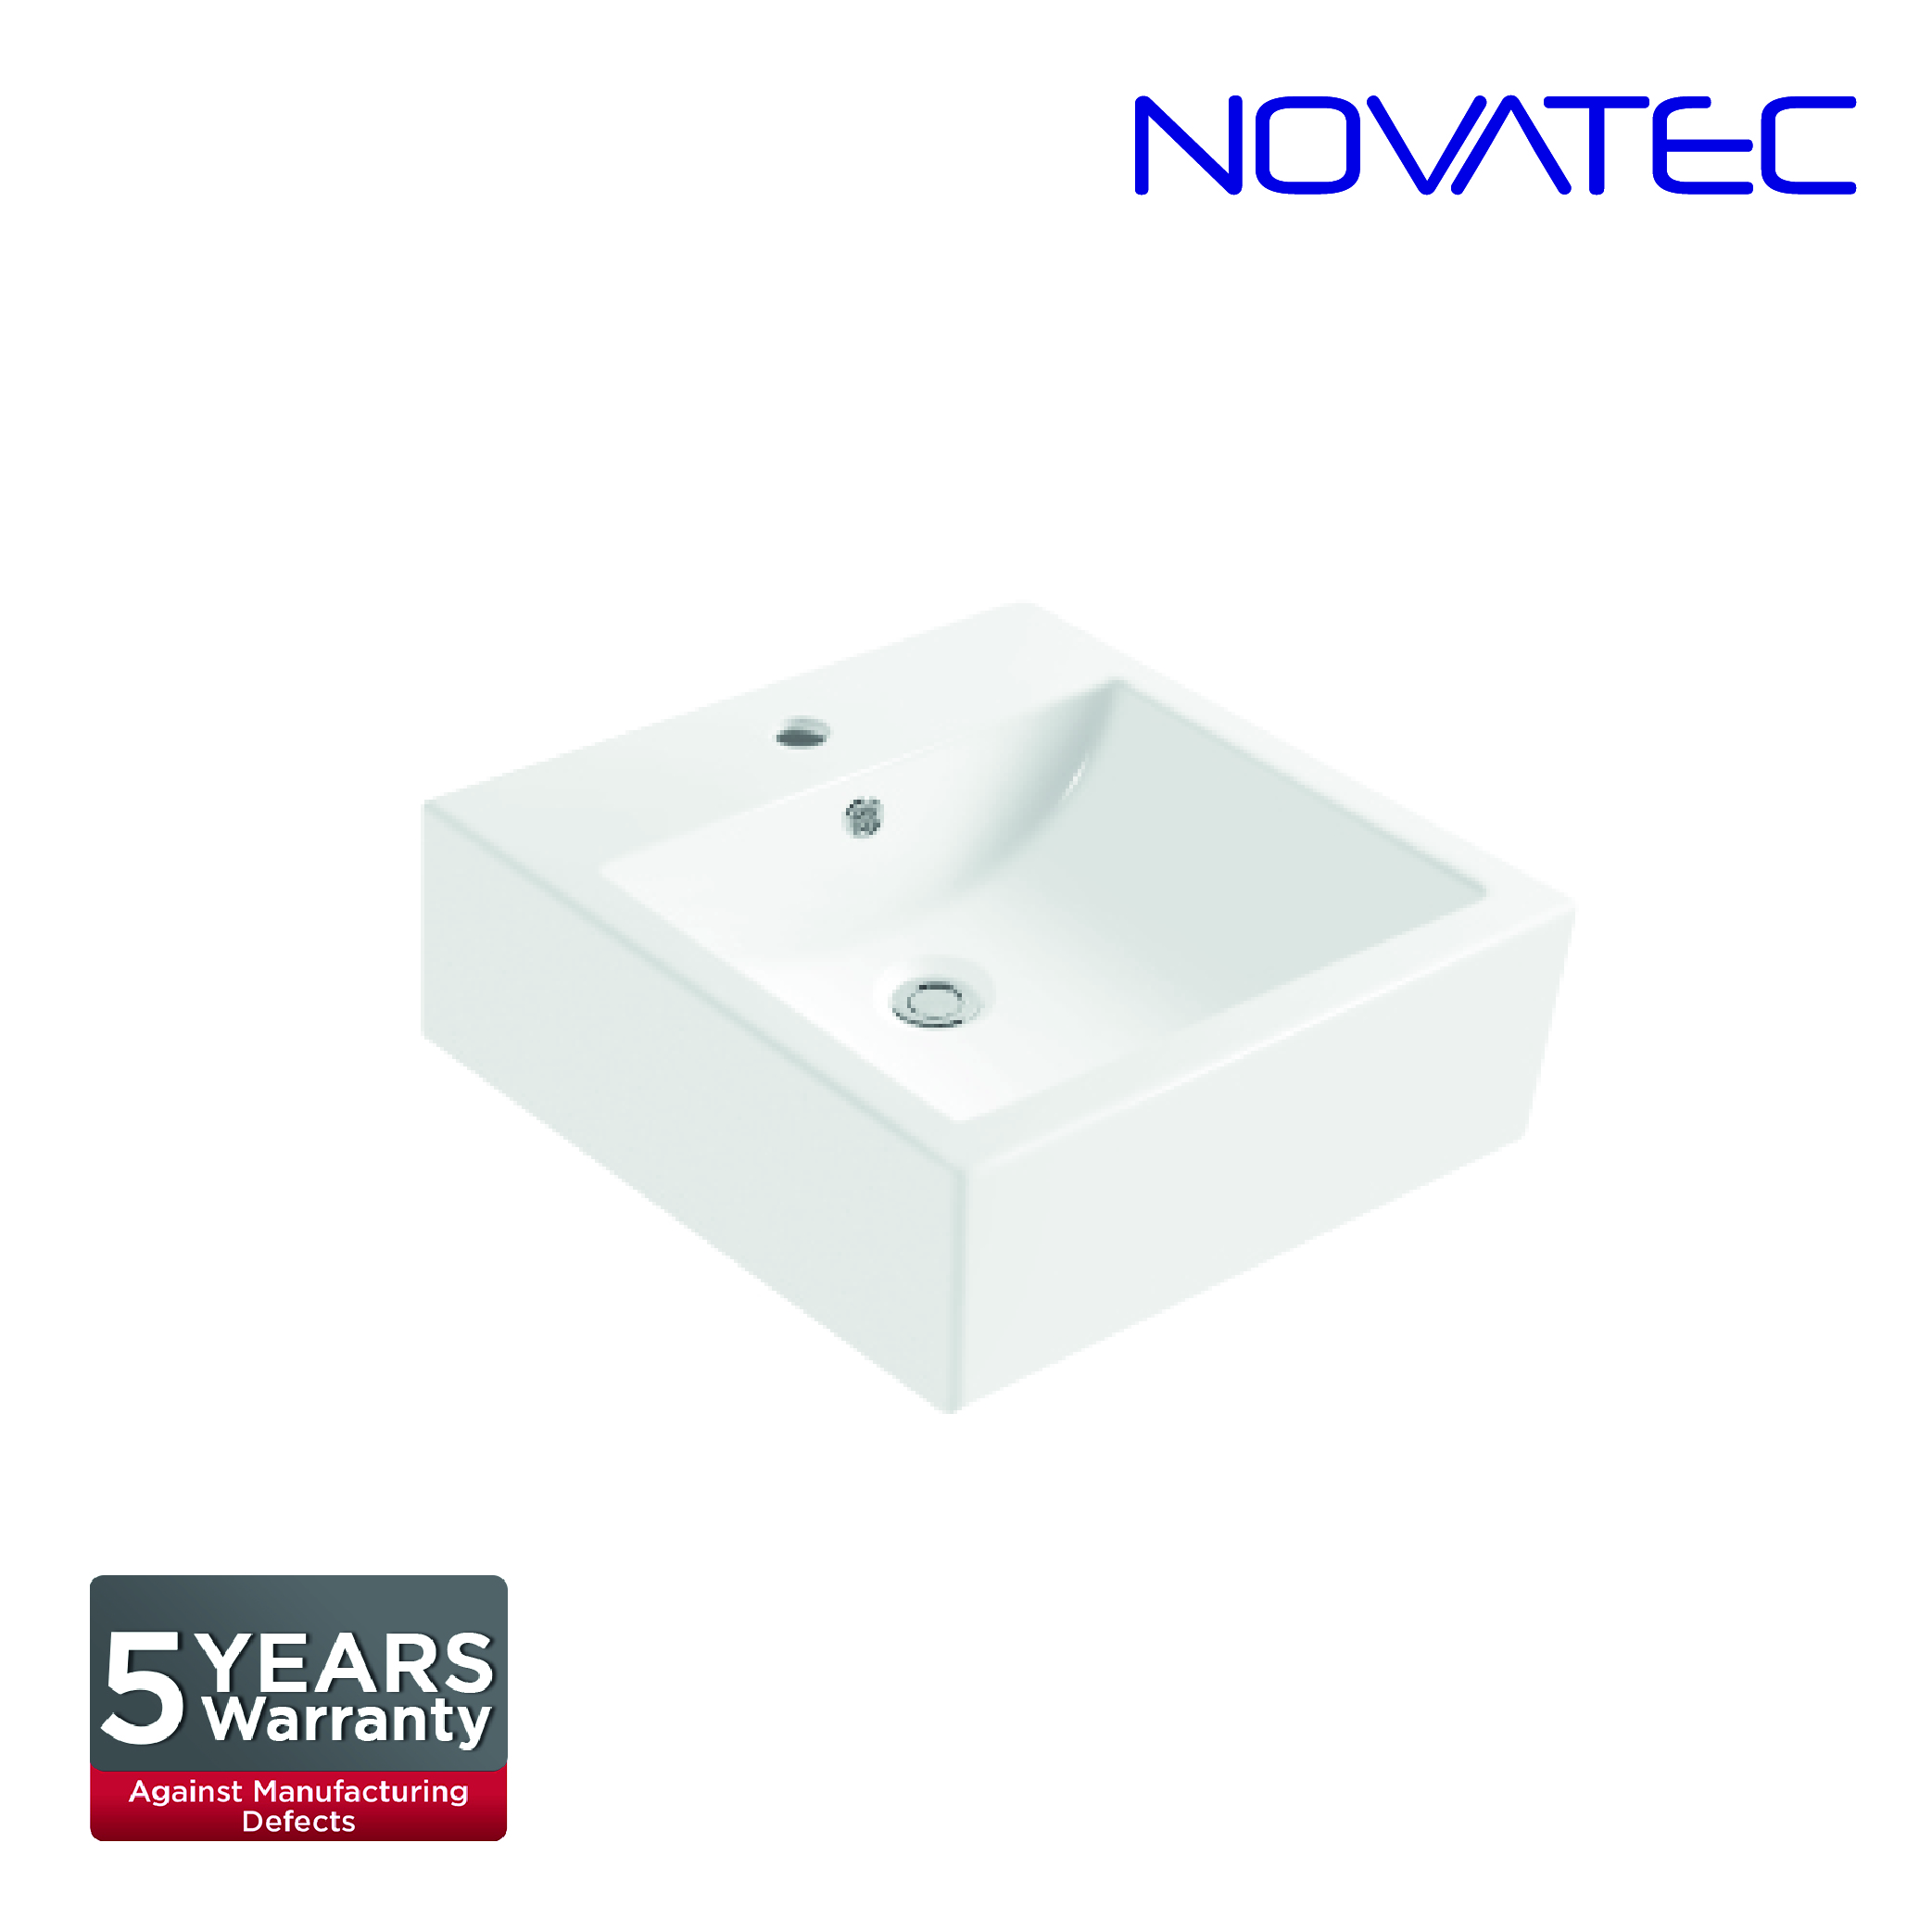 Novatec SW Hydra 460 Counter Top Basin CT6005